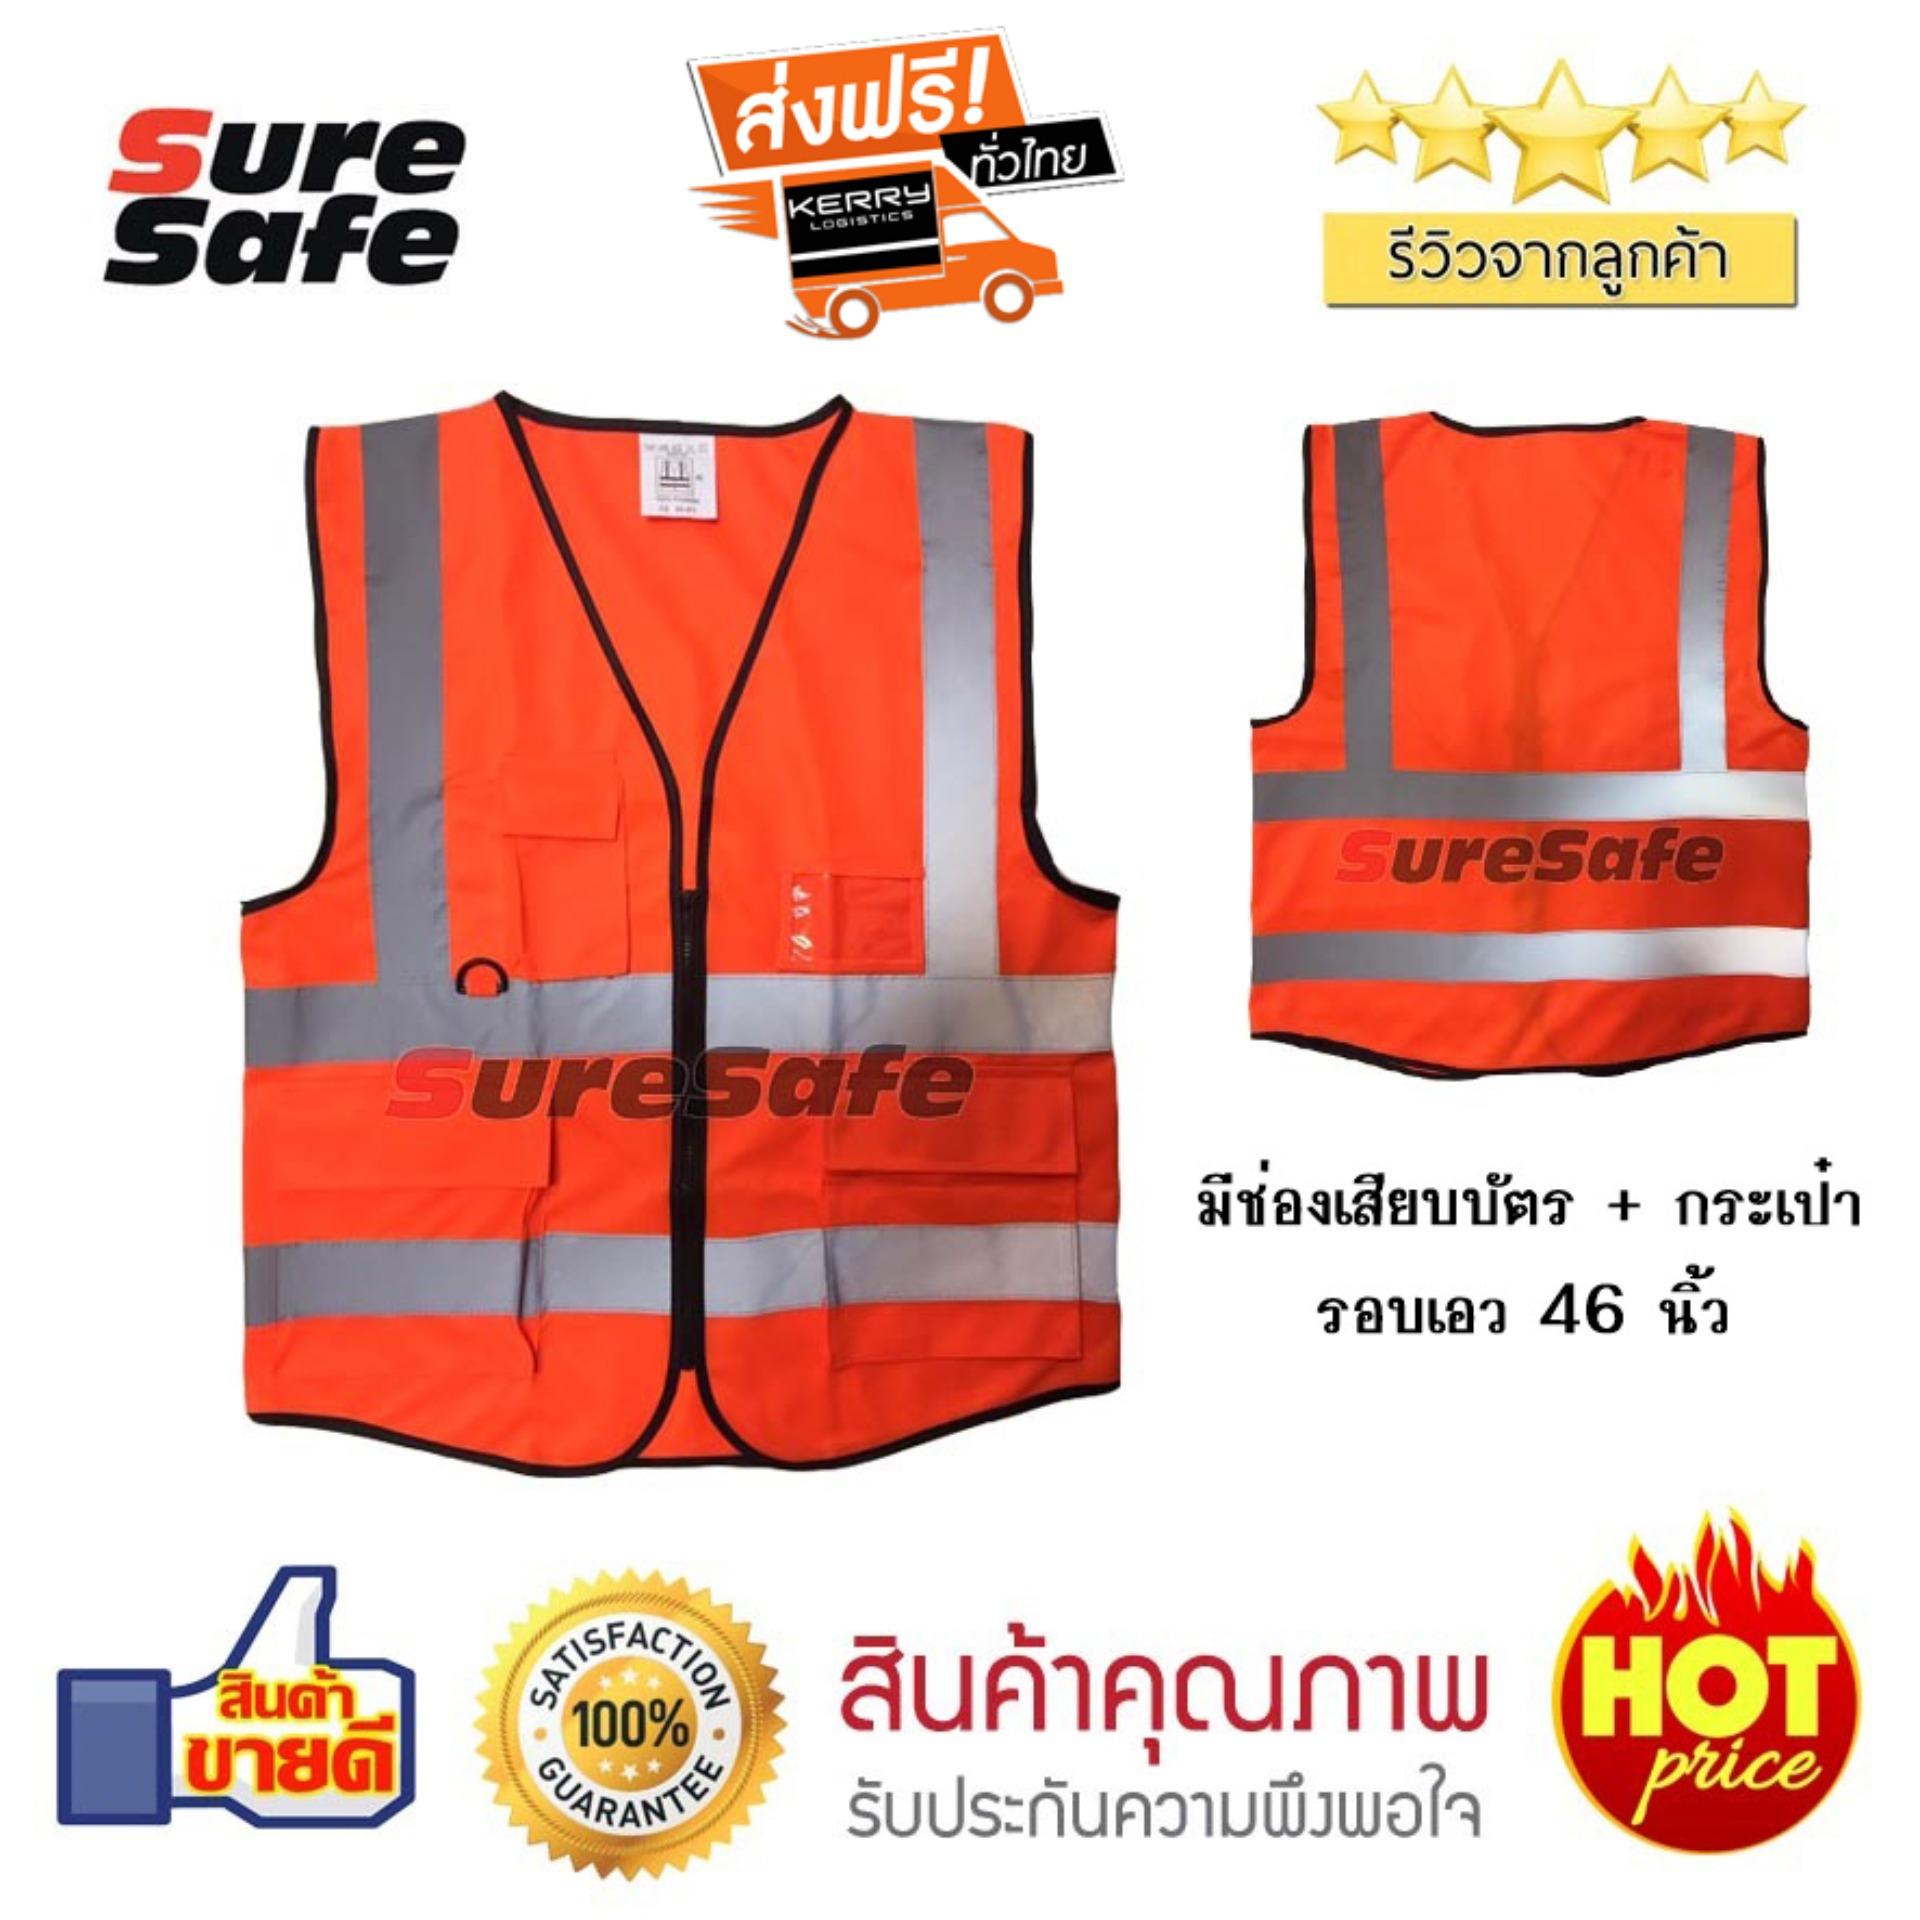 Suresafe Safety Vest เสื้อสะท้อนแสงรุ่นเต็มตัว สีส้ม มีช่องเสียบบัตรและปากกา